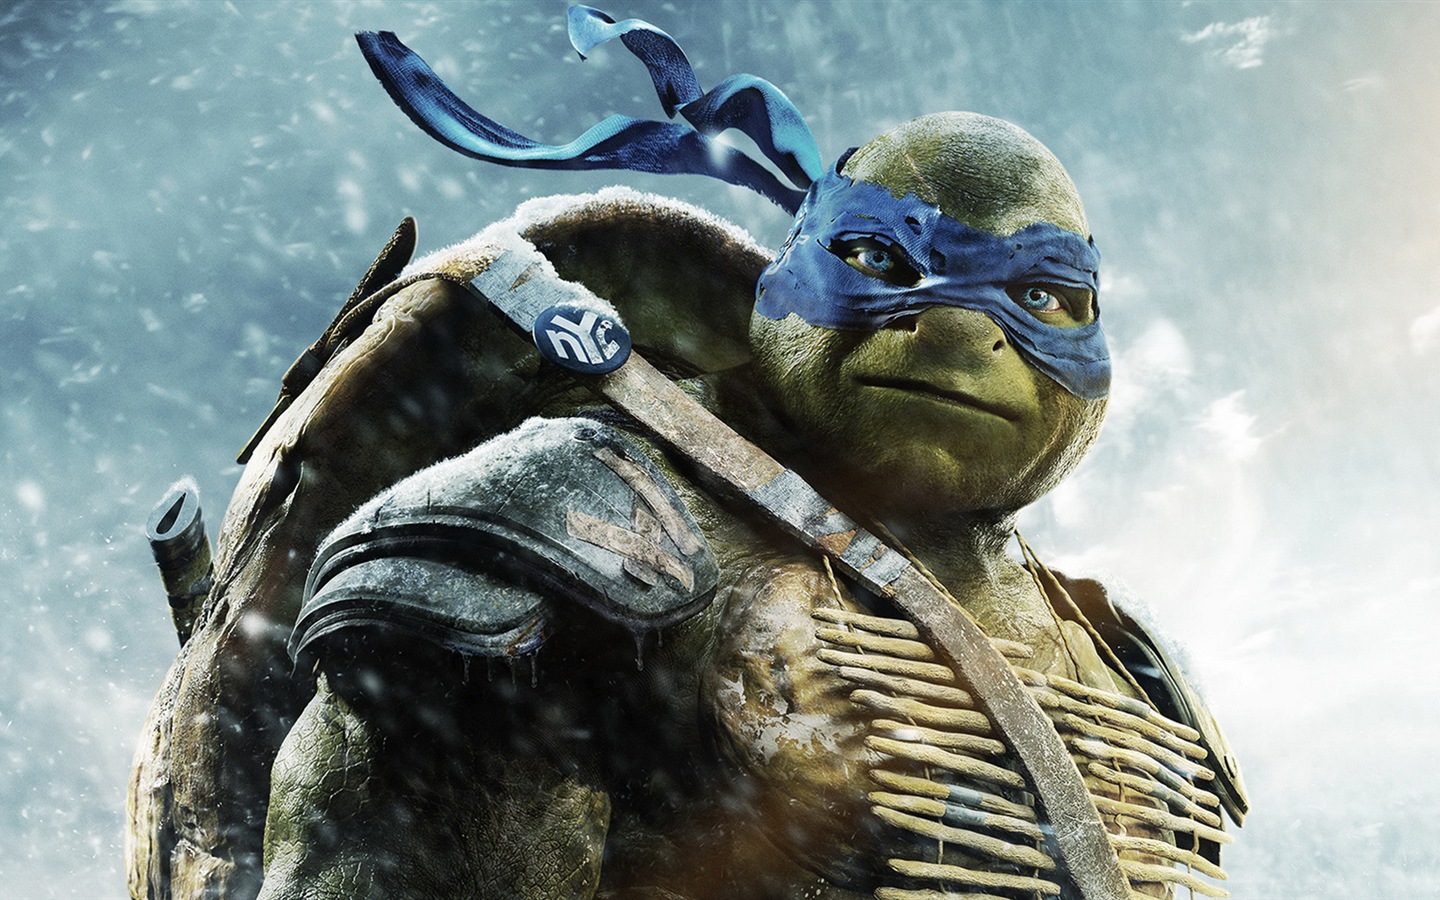 2014 Teenage Mutant Ninja Turtles HD movie wallpapers #1 - 1440x900